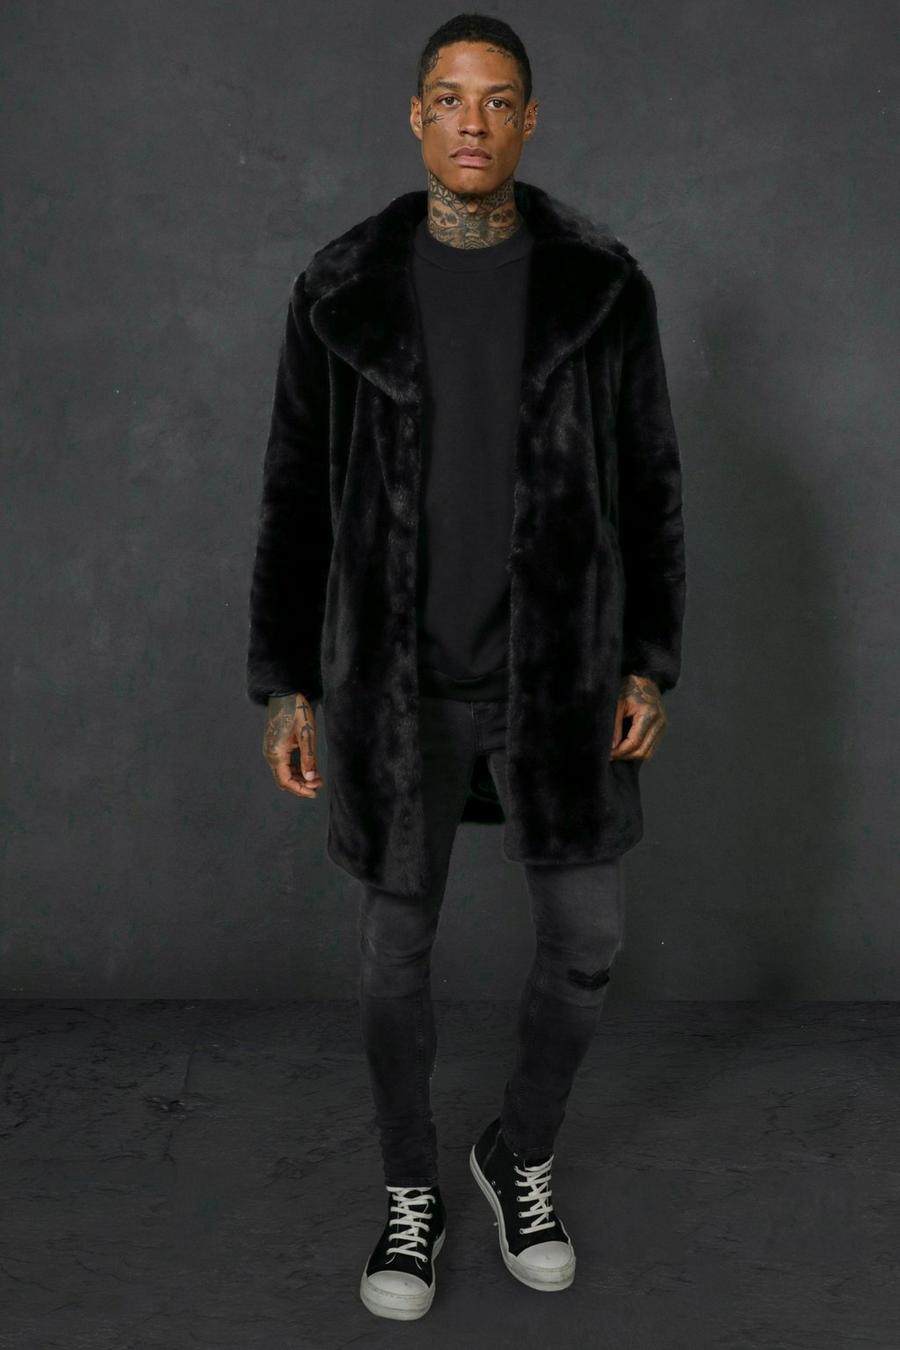 Black Faux Fur Overcoat